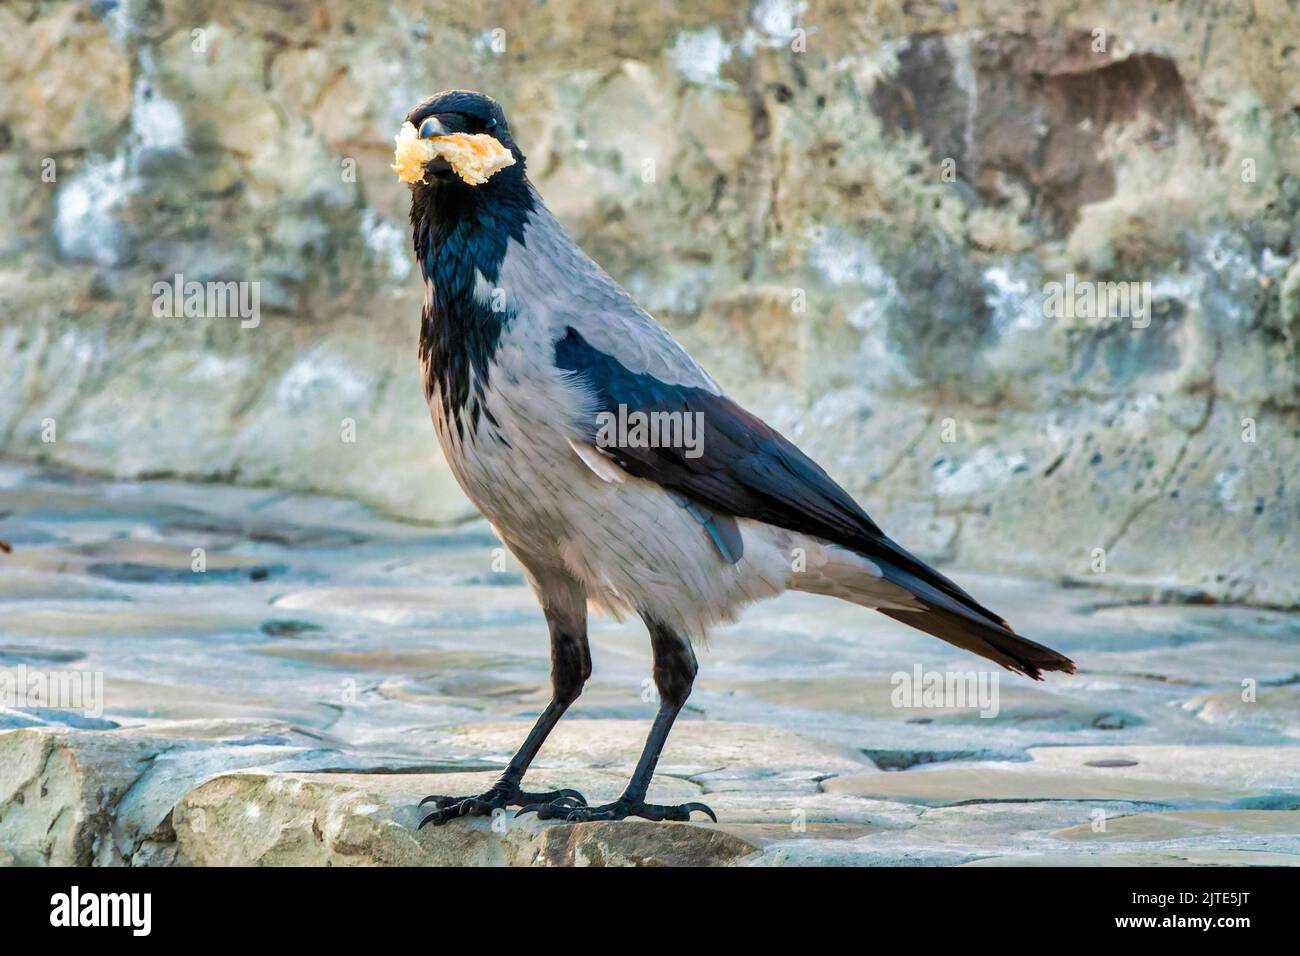 Cuervo con capucha (Corvus cornix) Robando pan Foto de stock